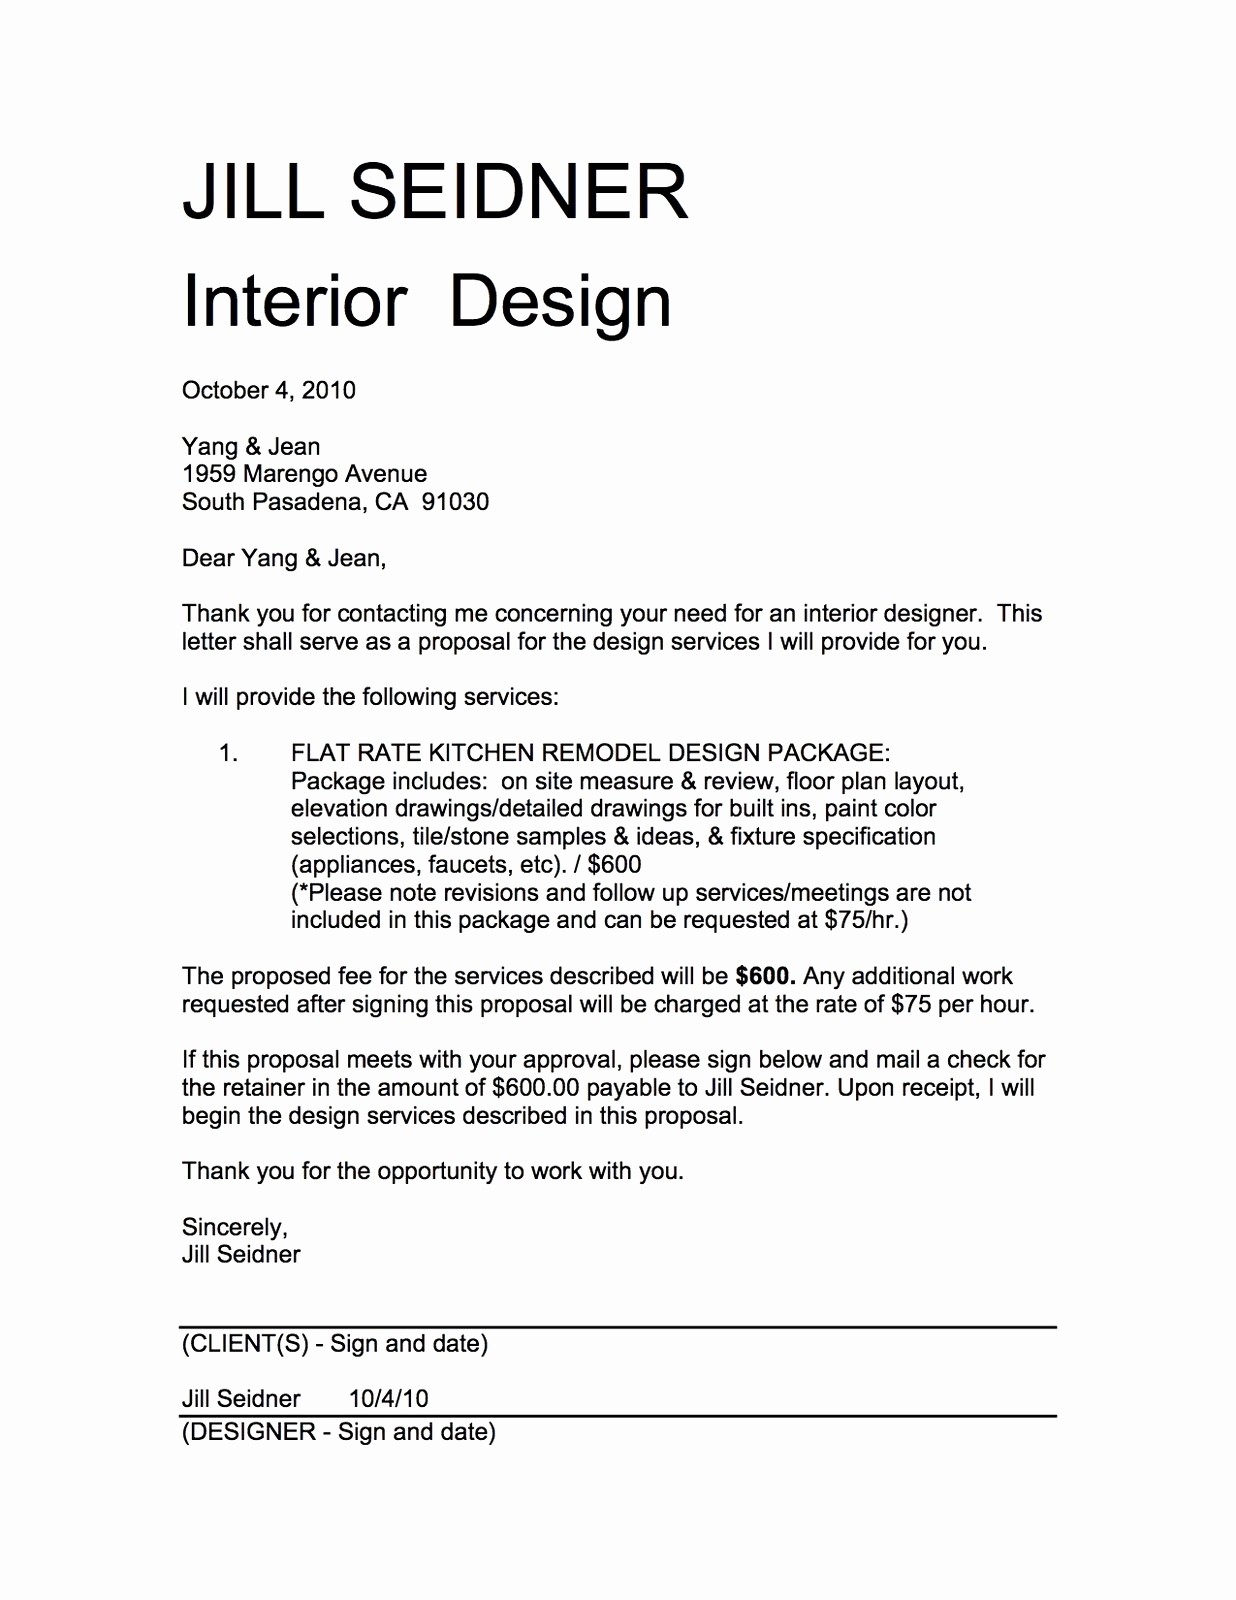 Example Letter Of Agreement Fresh Interior Document